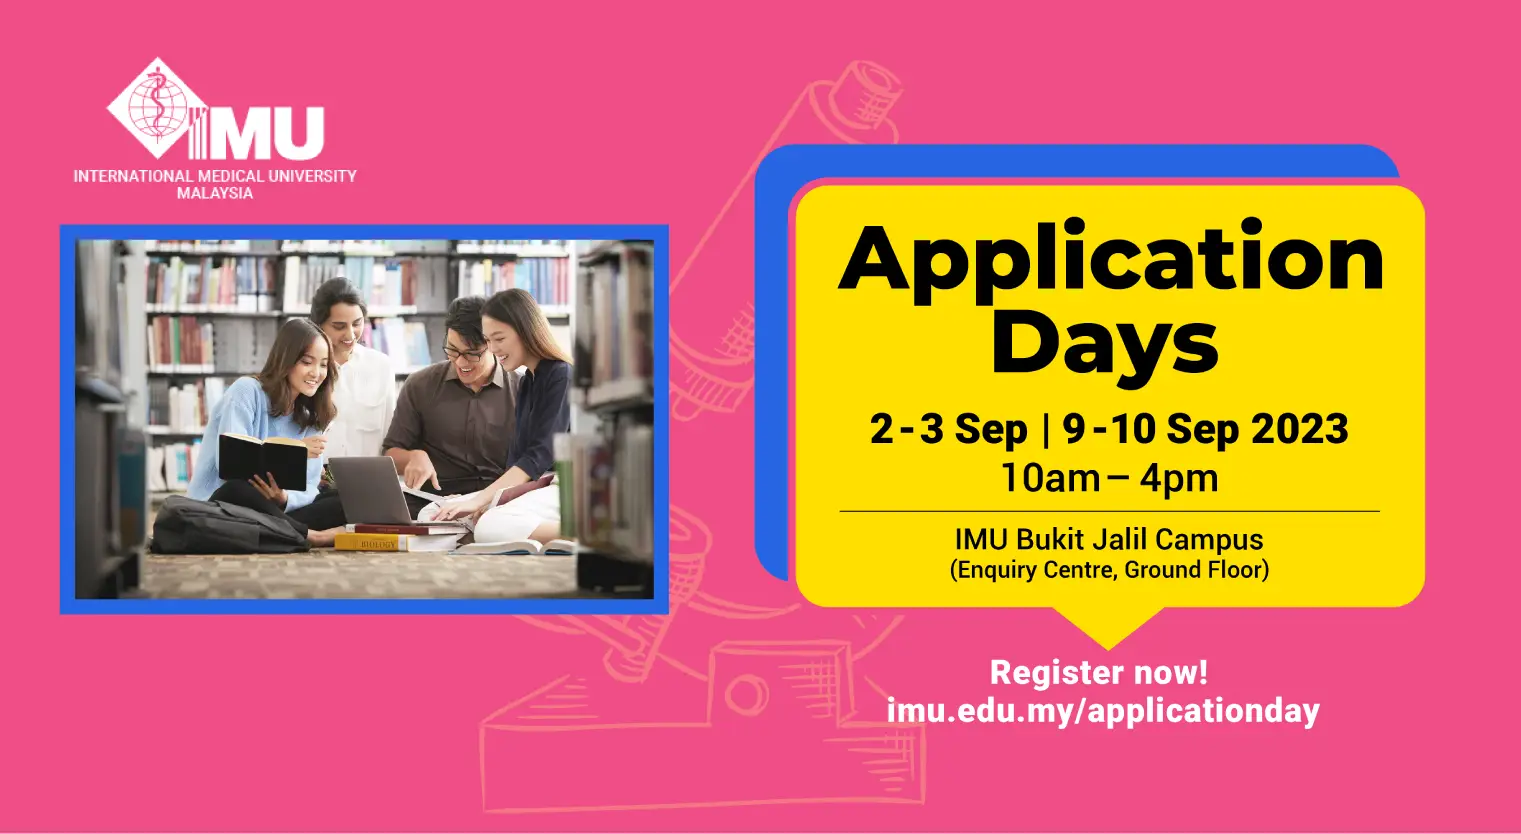 imu-application-days-9-10-september-2023